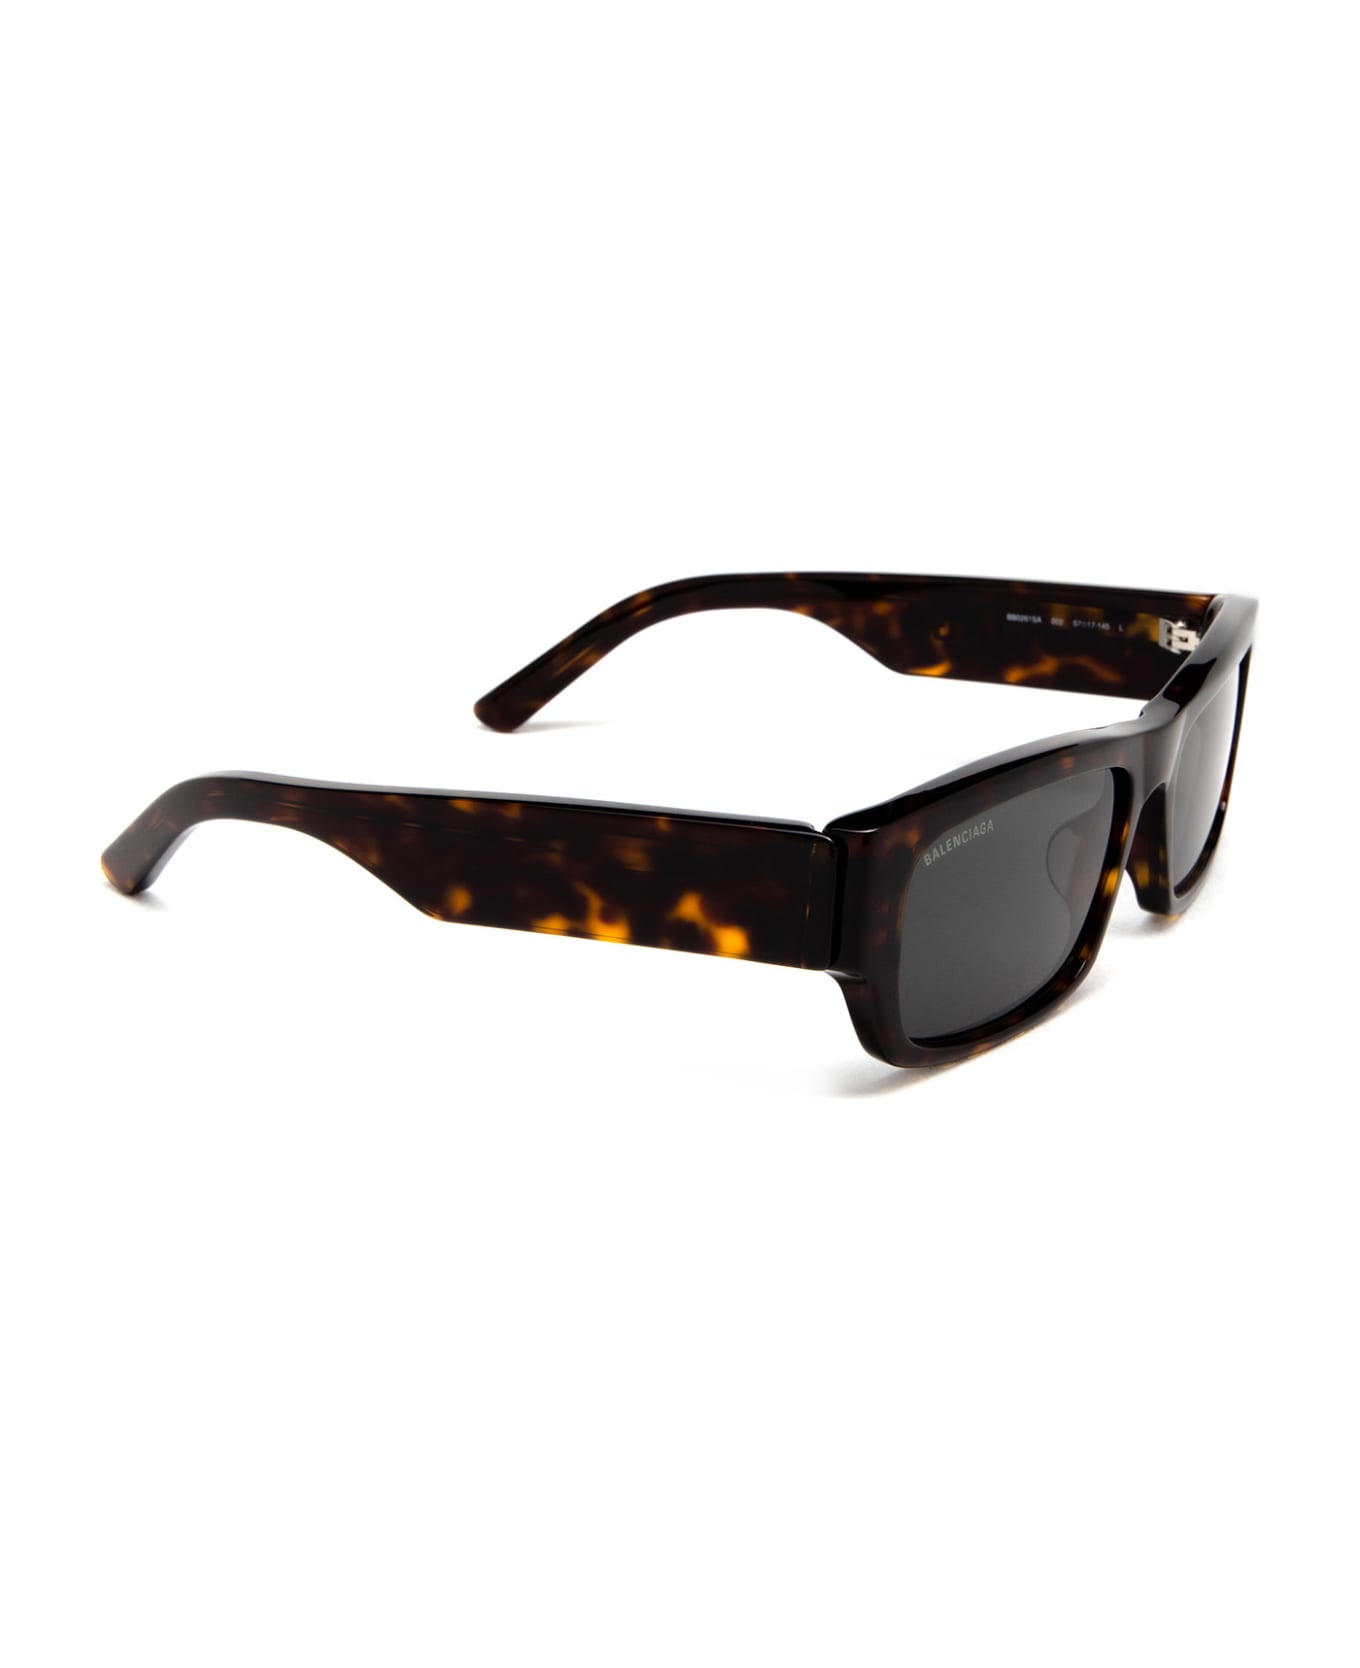 Balenciaga Eyewear Bb0261sa Sunglasses - 002 HAVANA HAVANA GREEN